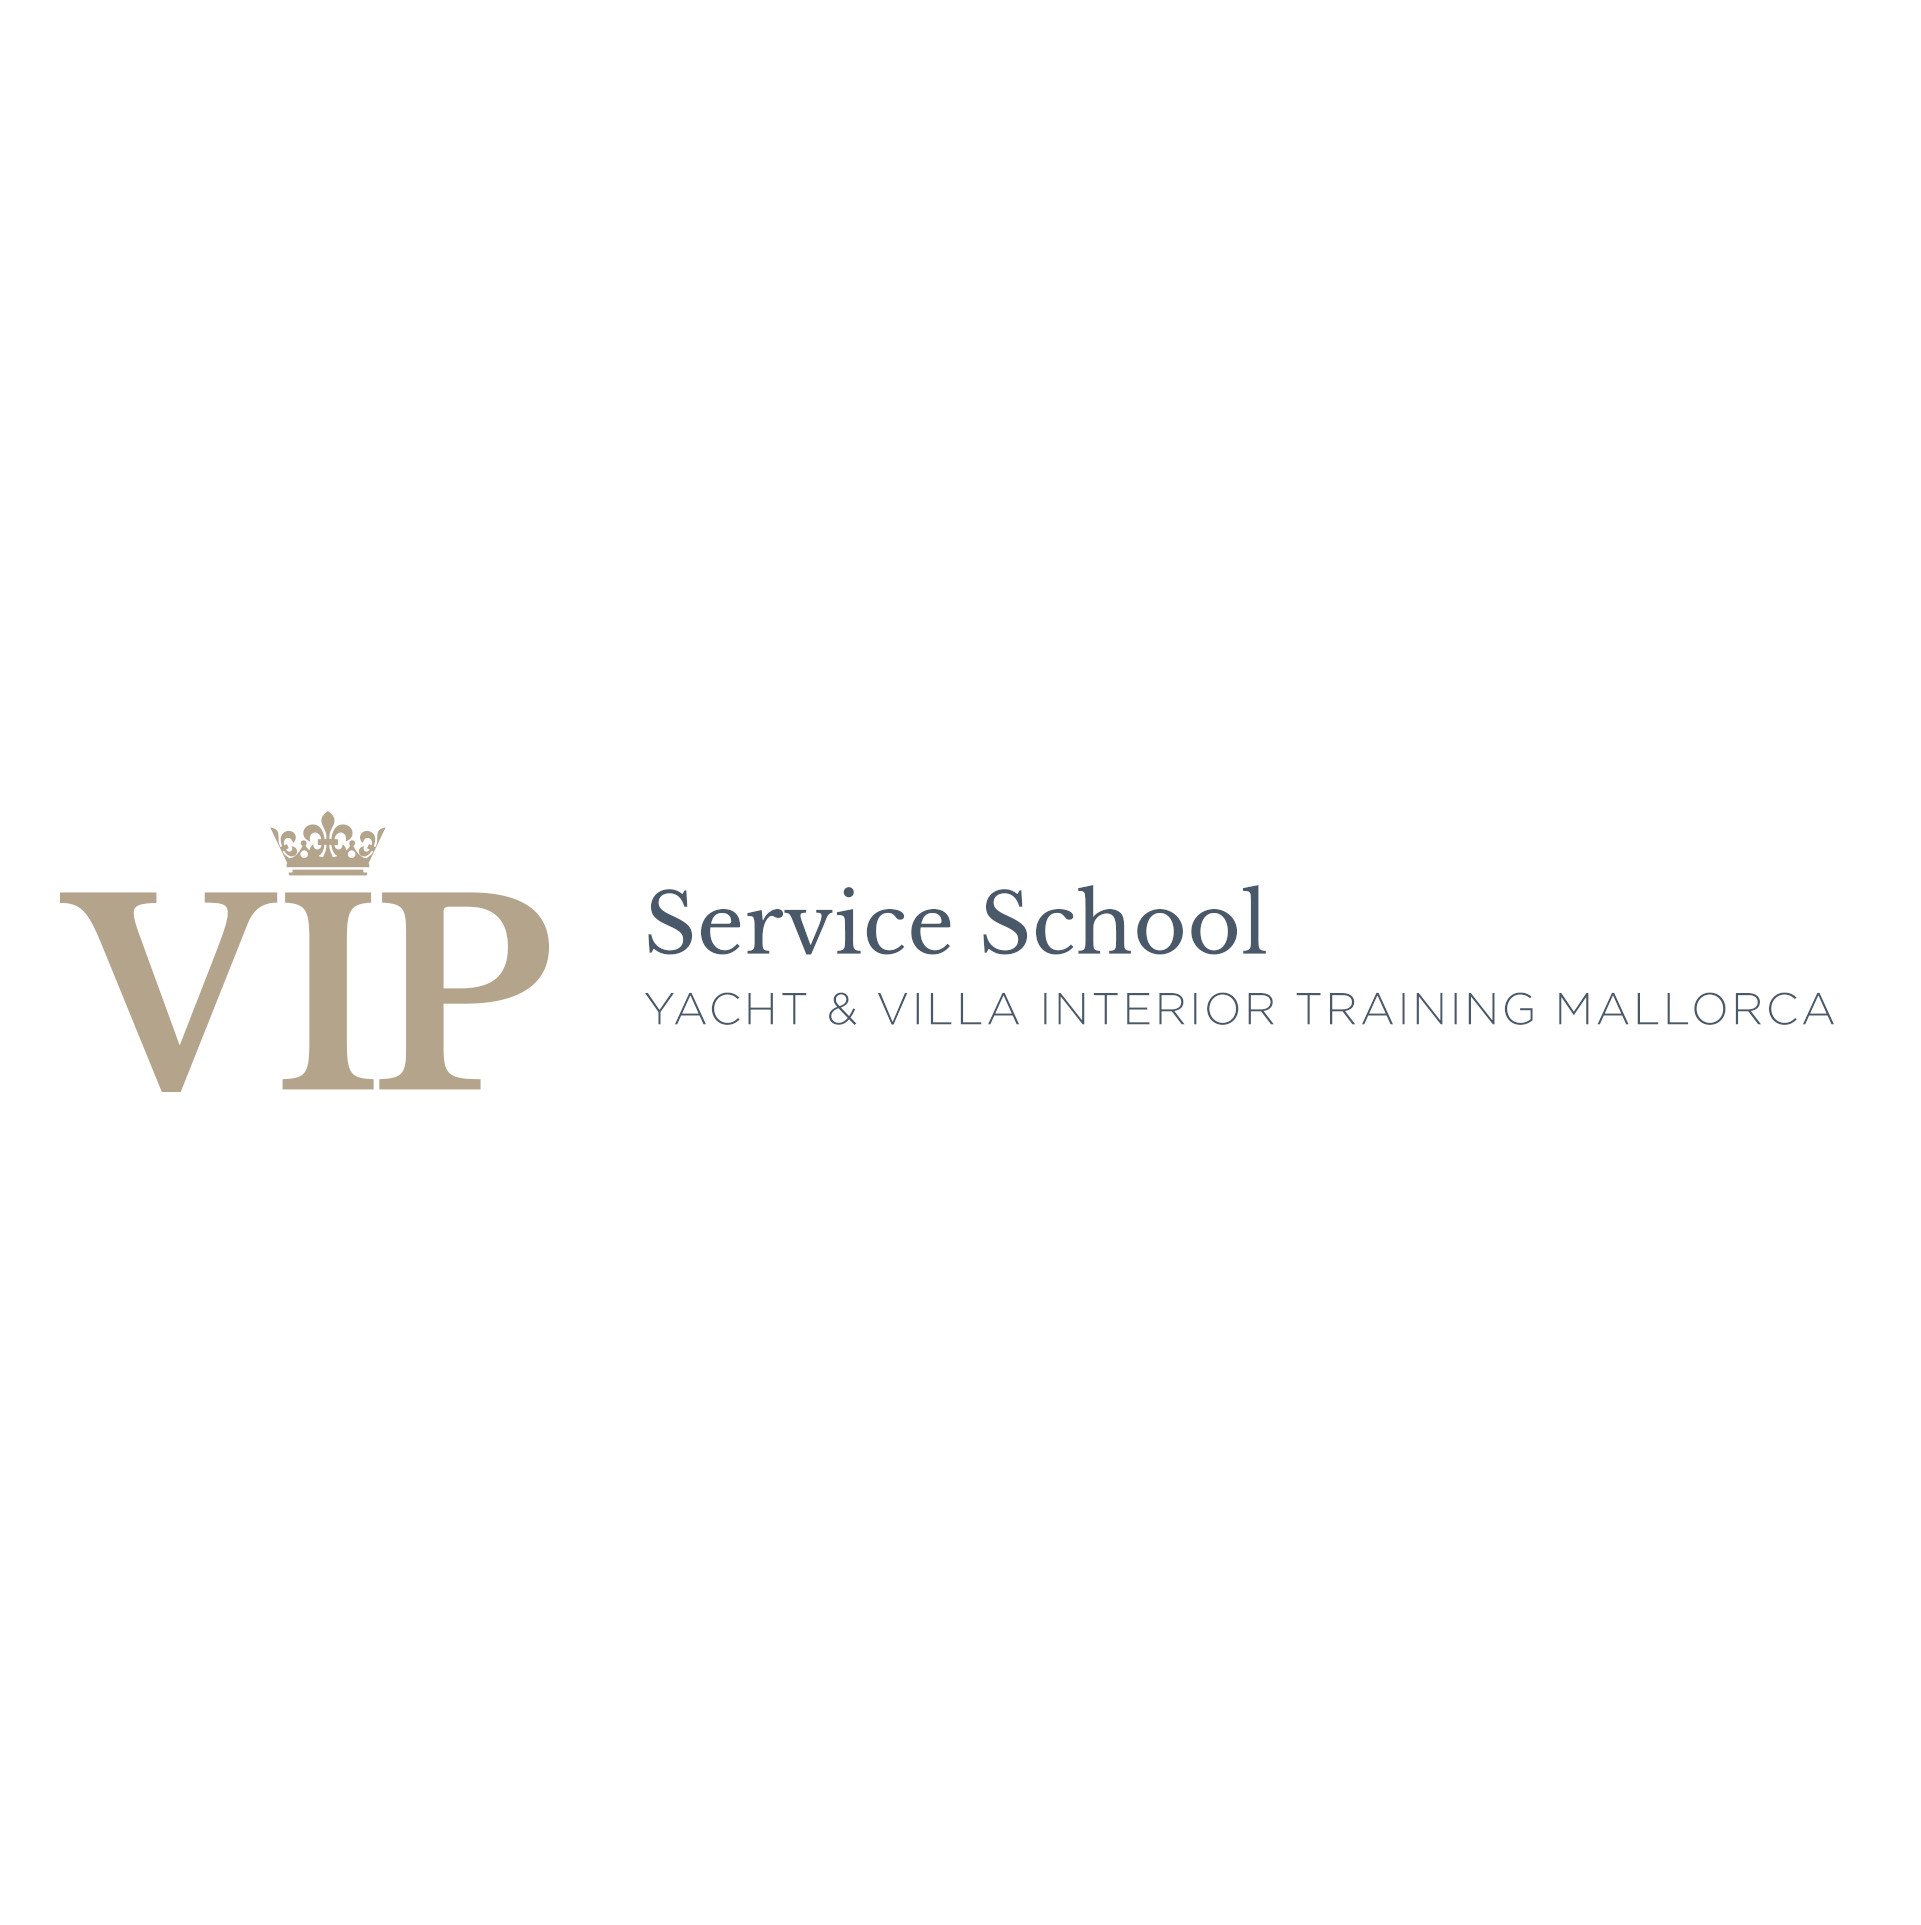 VIP Service School